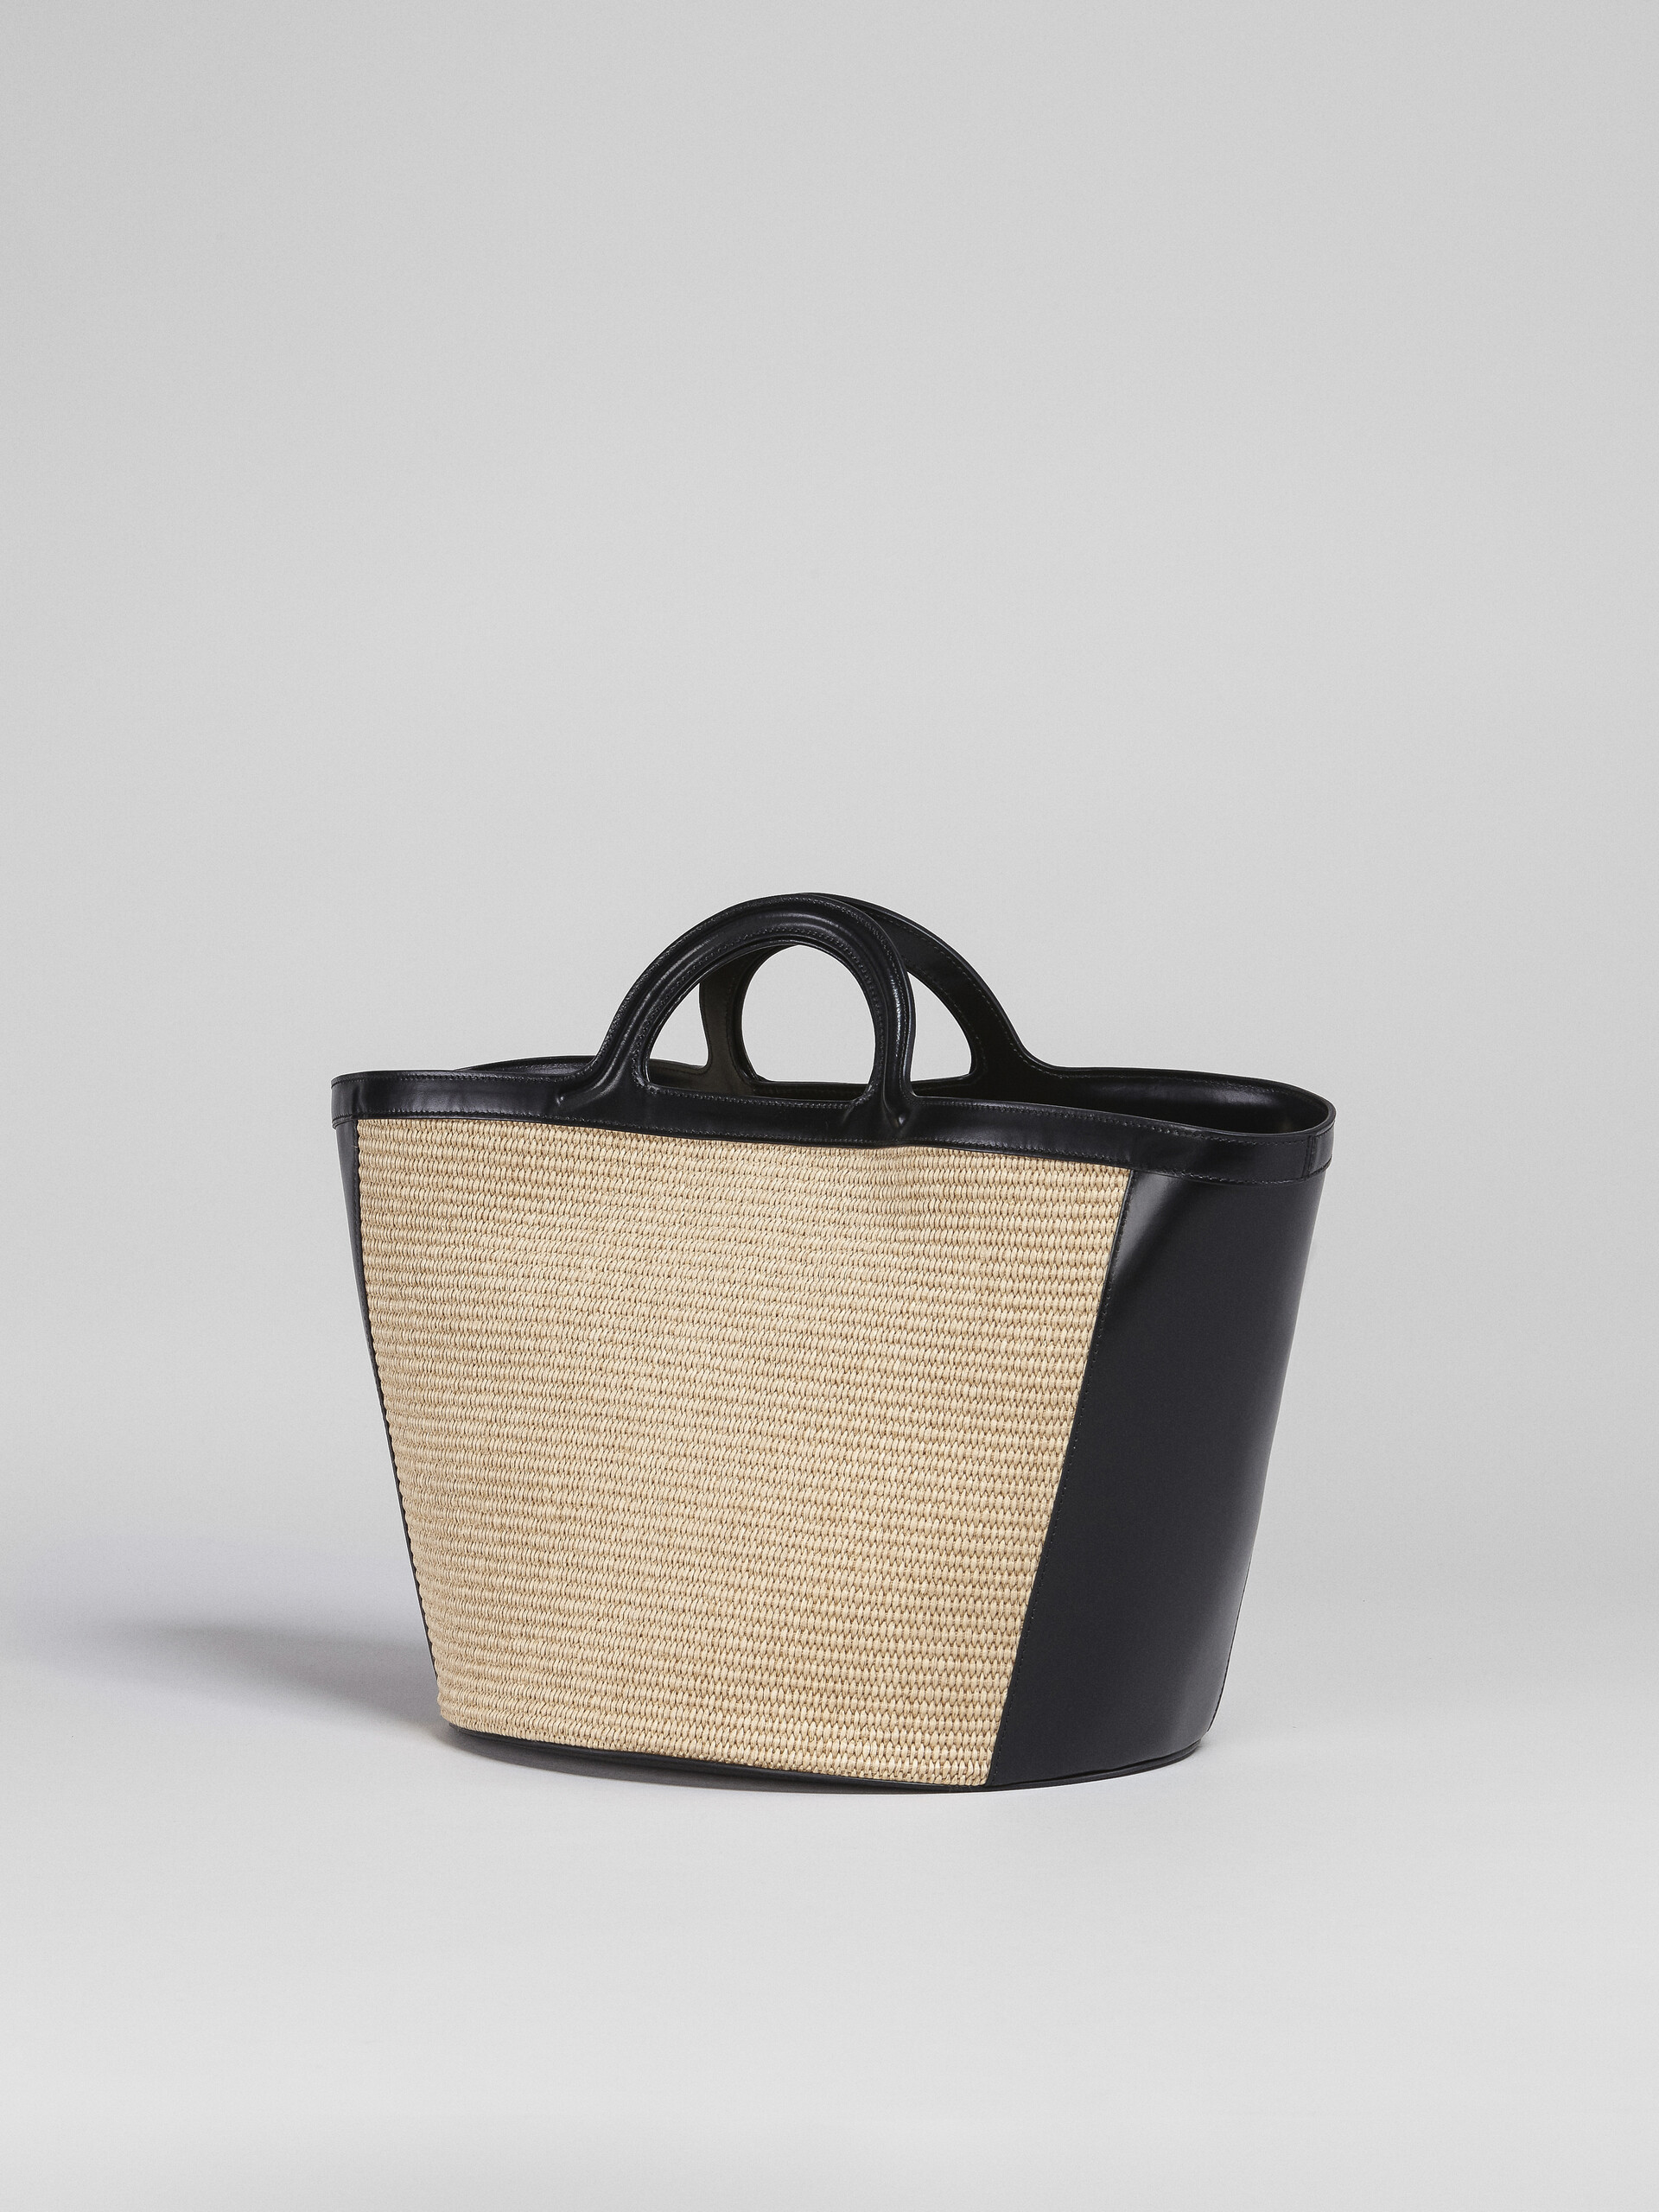 TROPICALIA large bag in black leather and raffia - Handbag - Image 3